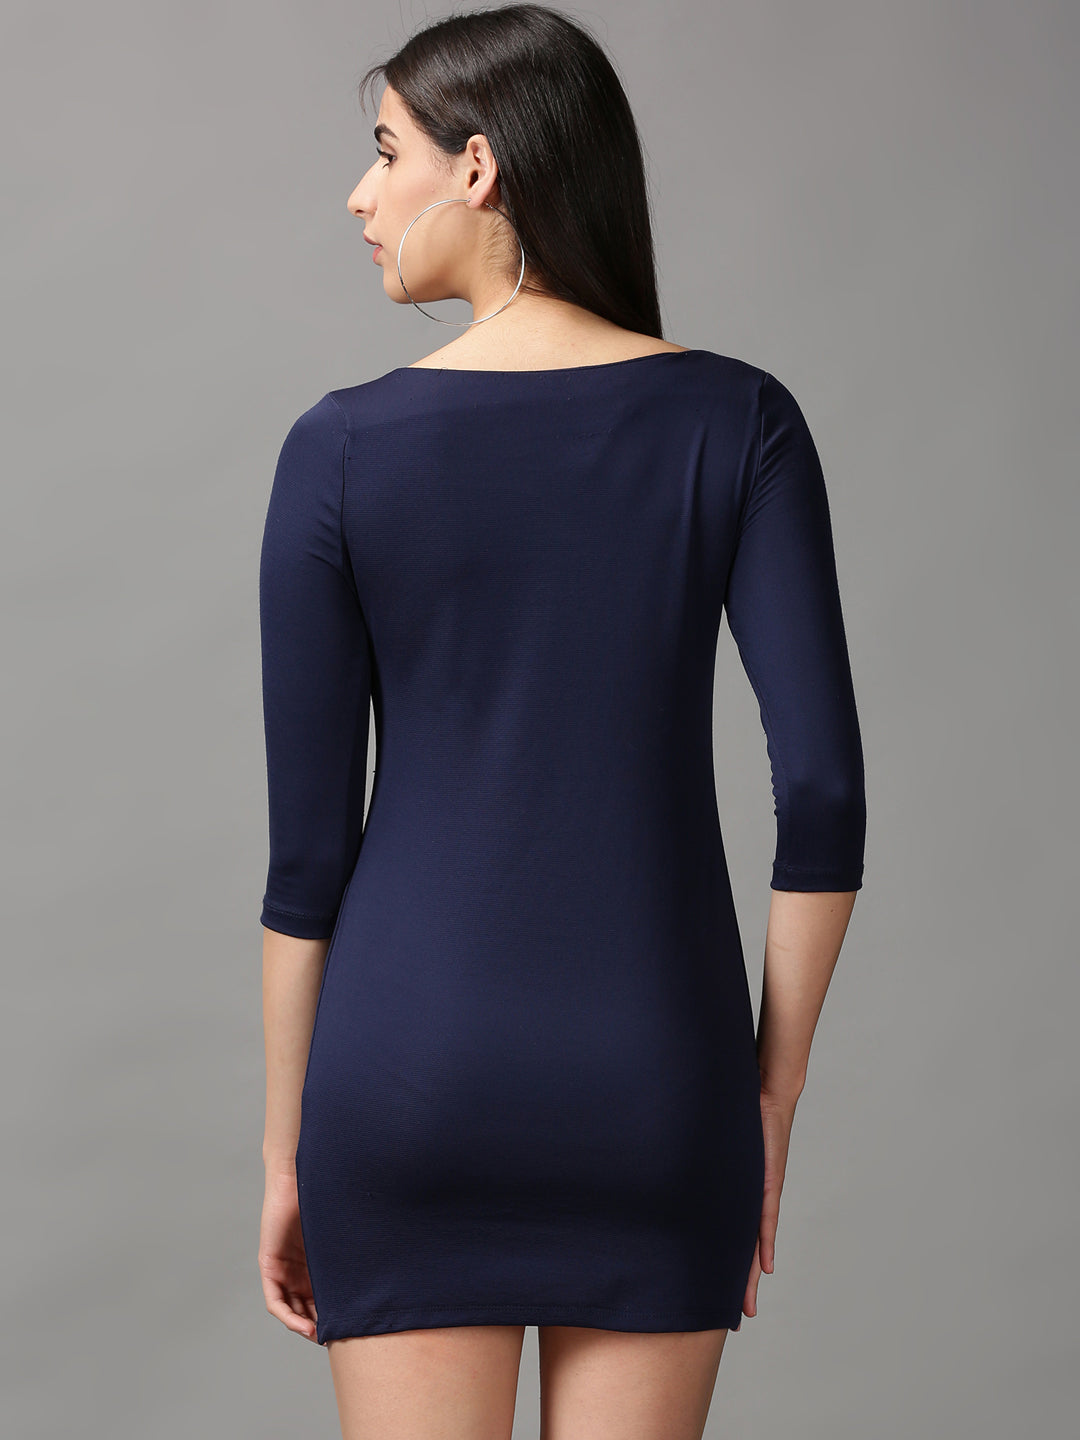 Women's Blue Solid Bodycon Dress